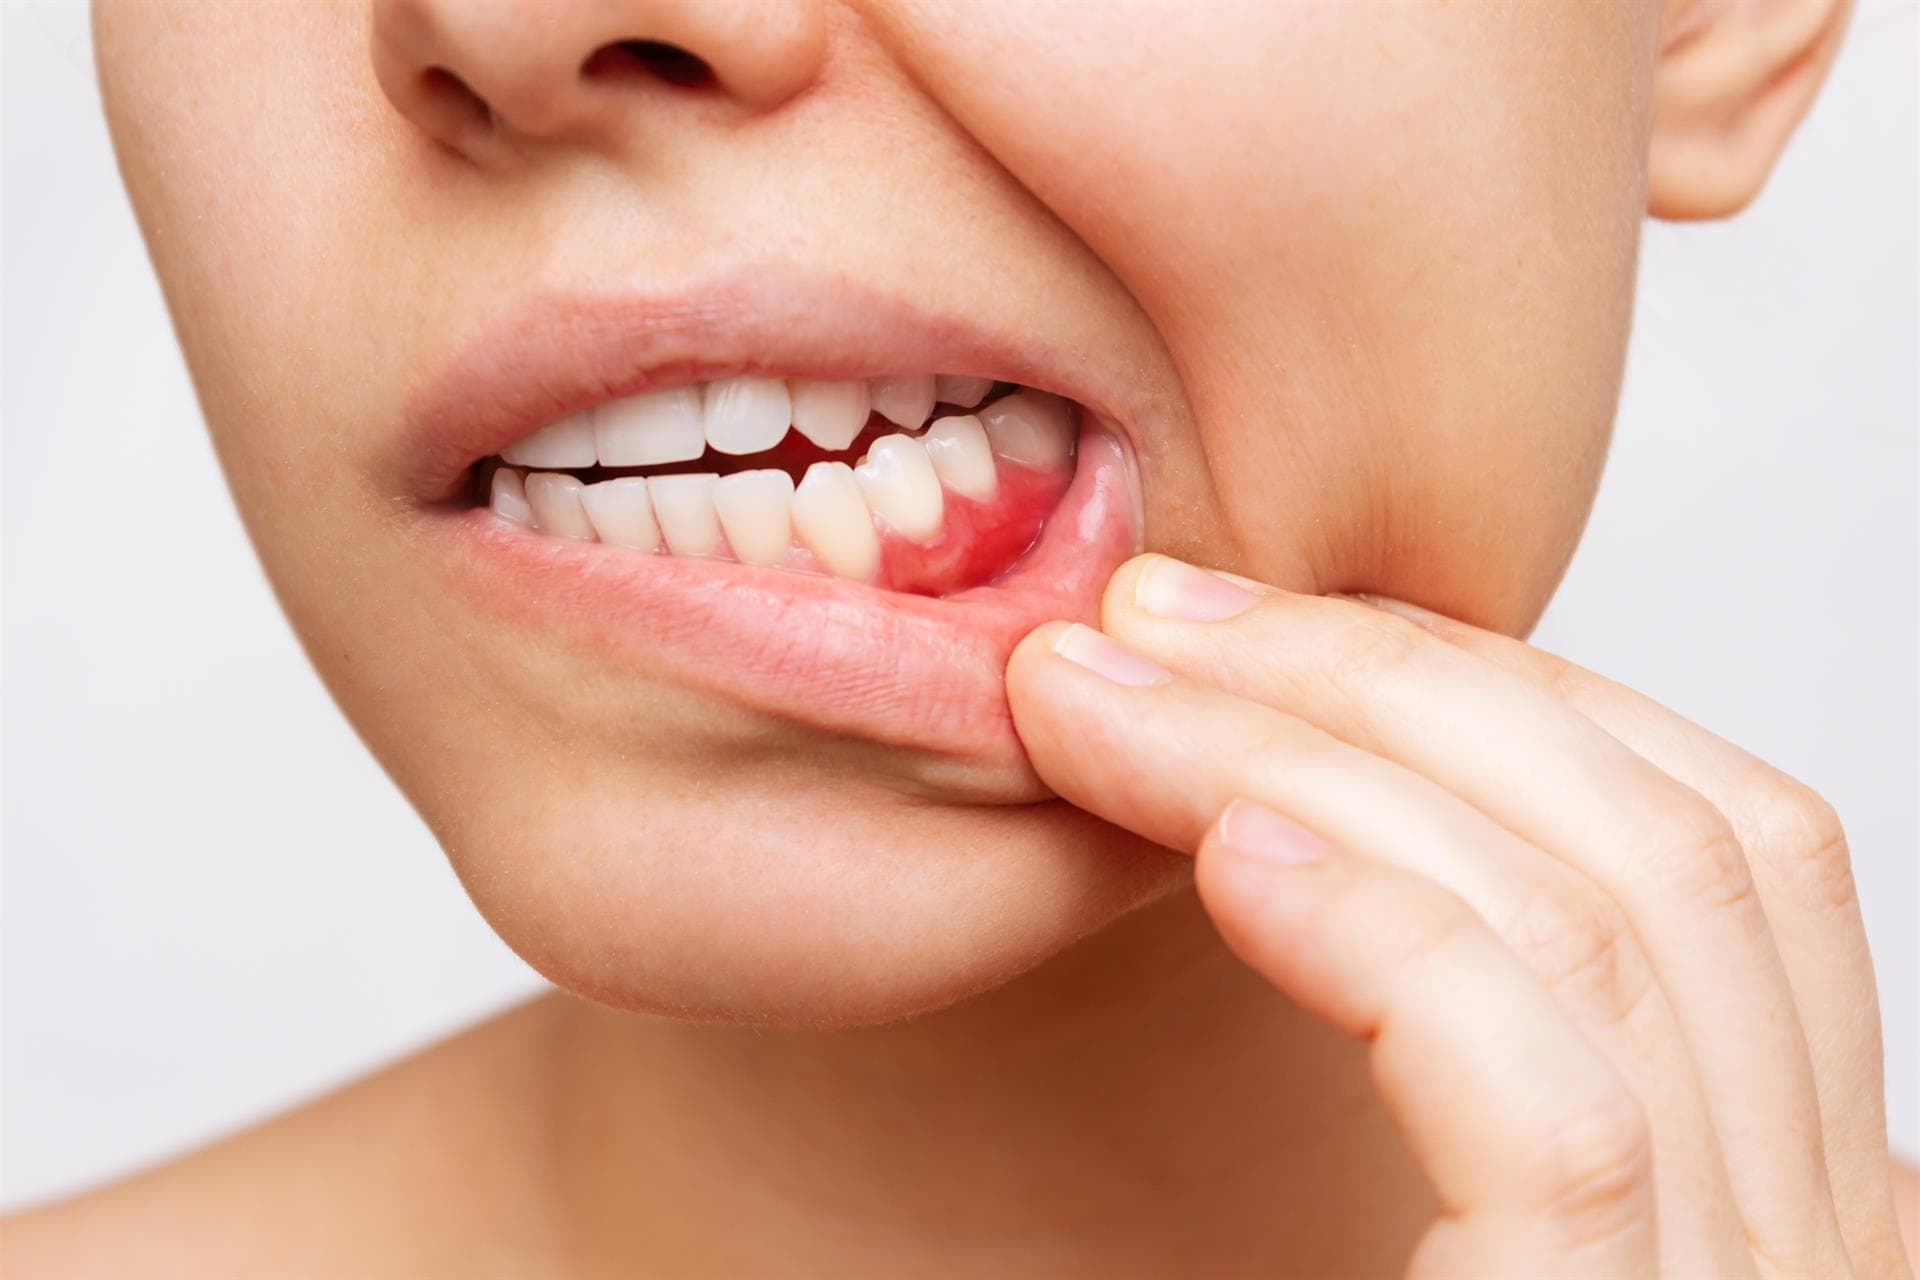  Olvidate de la gingivitis y periodontitis